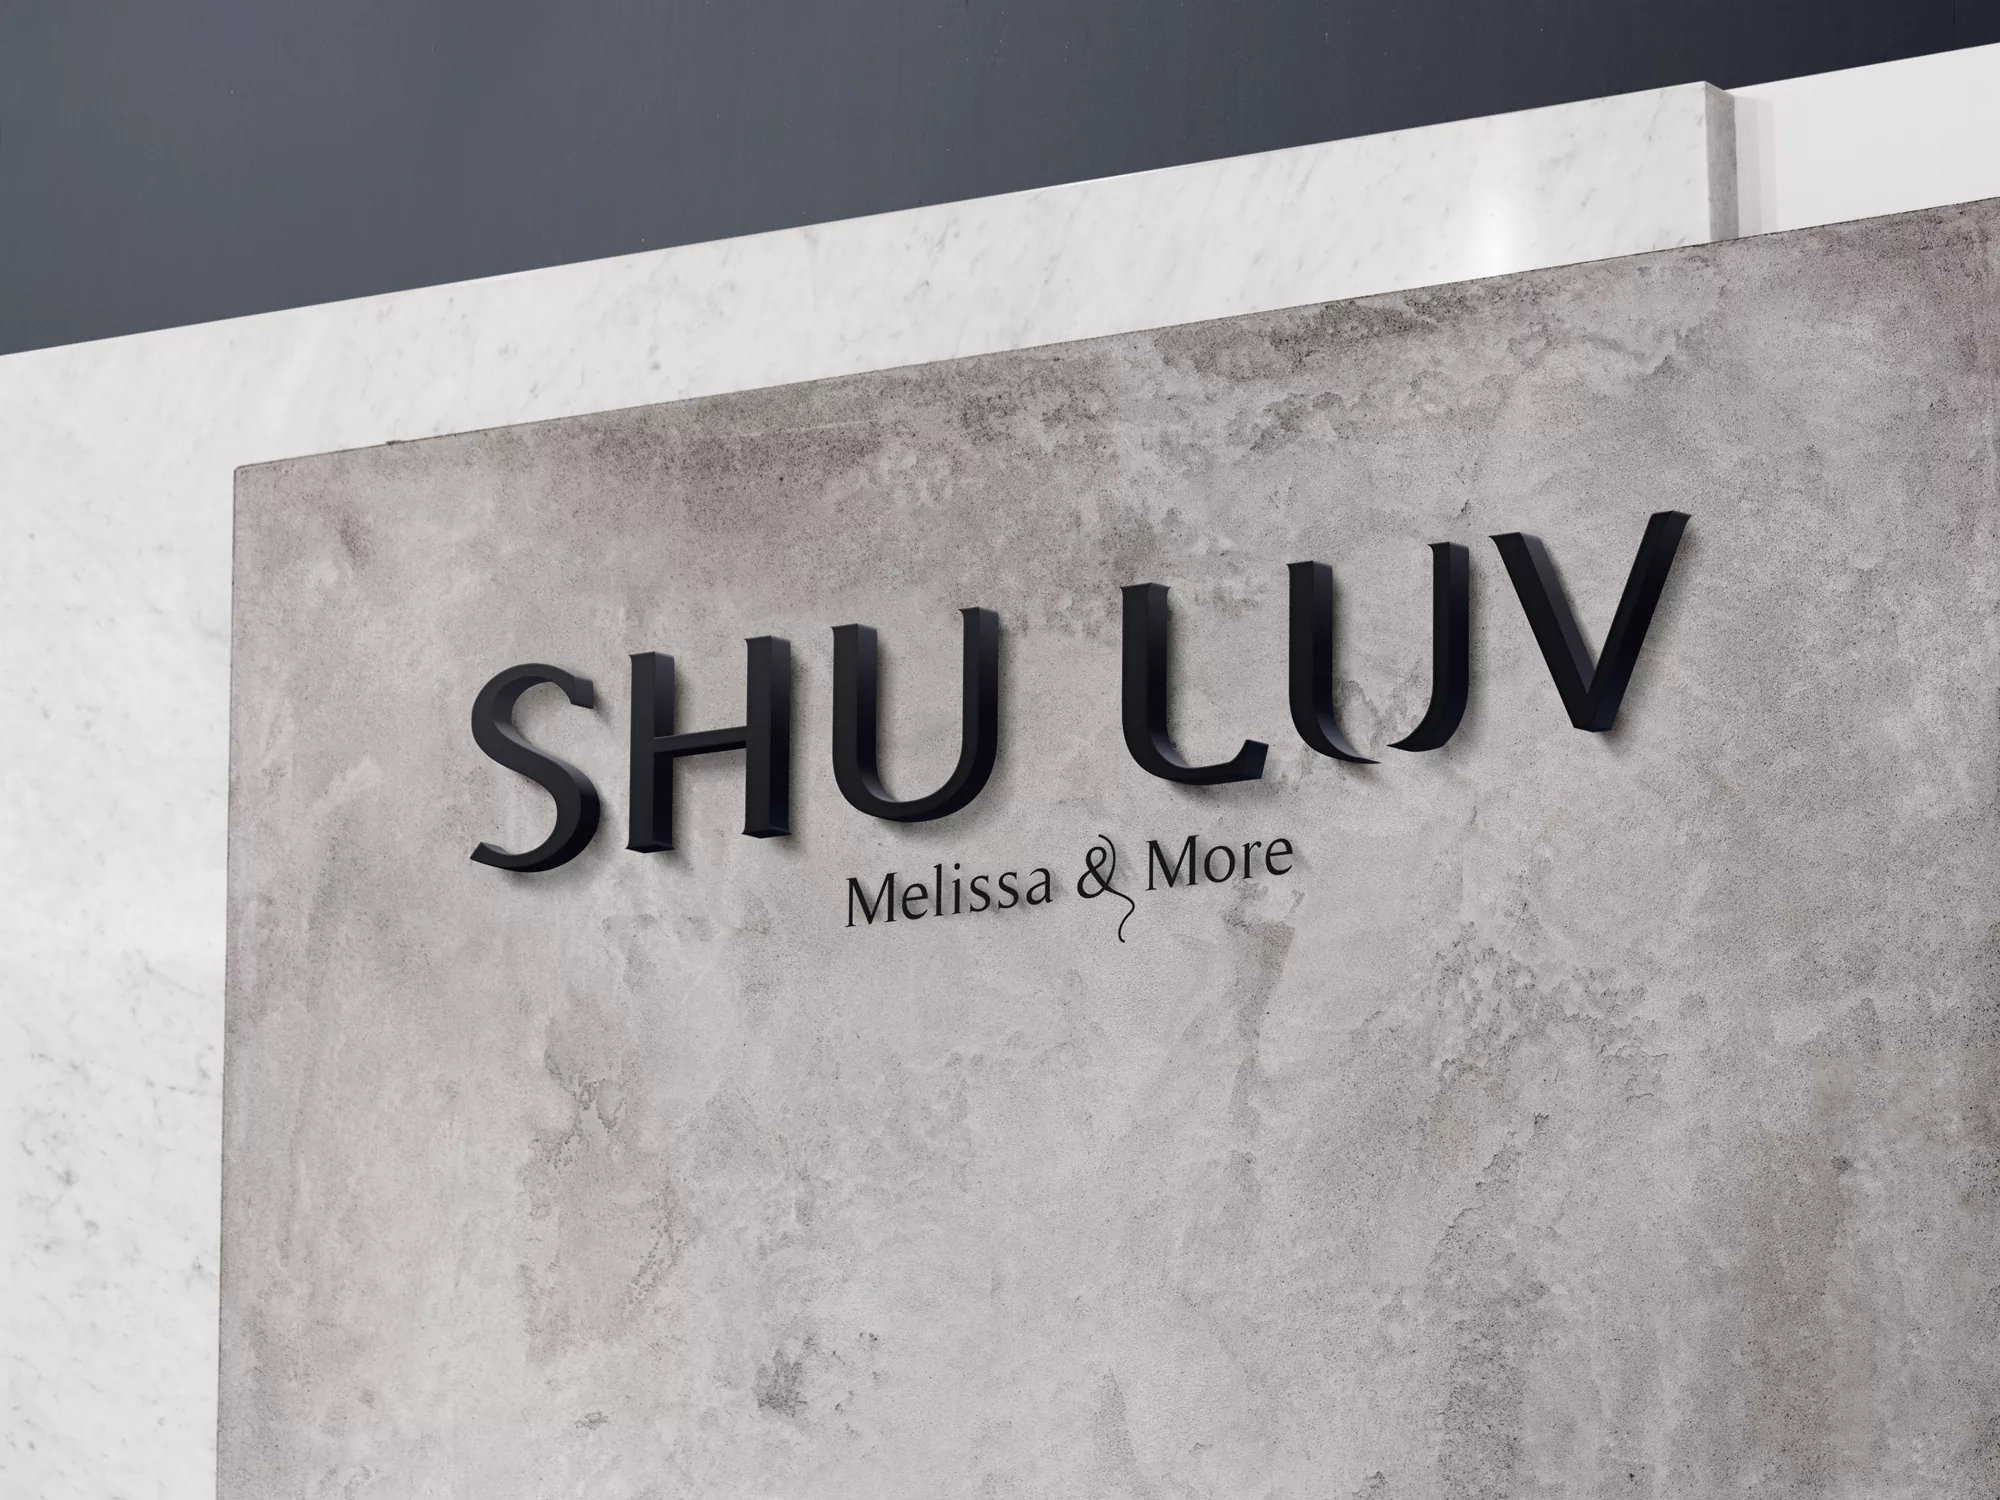 Shuluv: Melissa & More - projekt loga dla marki obuwniczej wizualizacja napisu